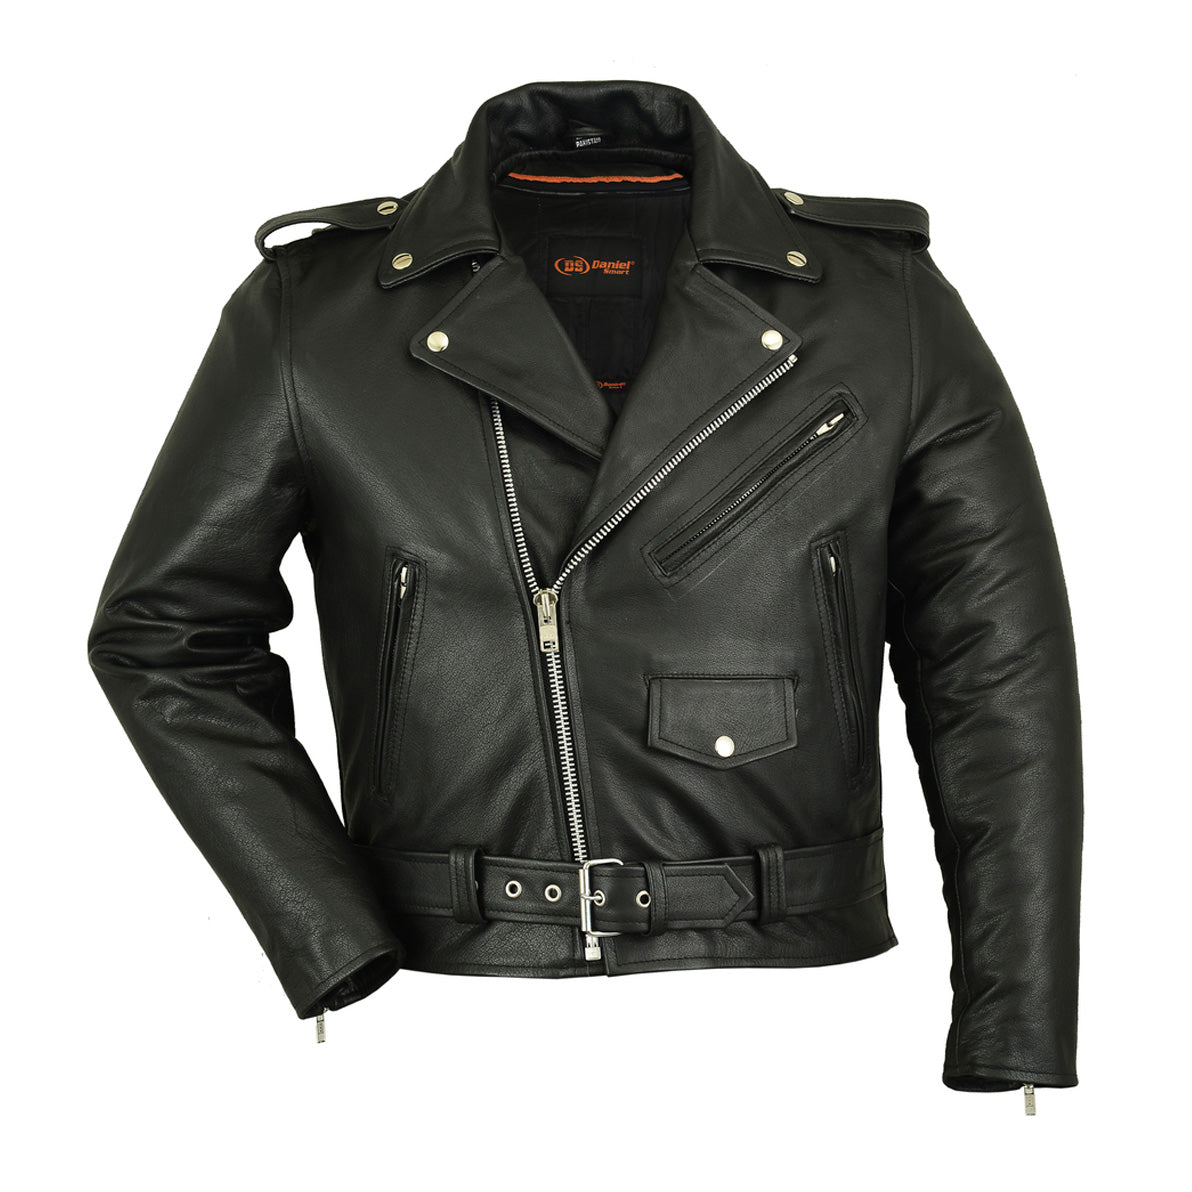 Men's Classic Plain Side Police Style M/C Jacket